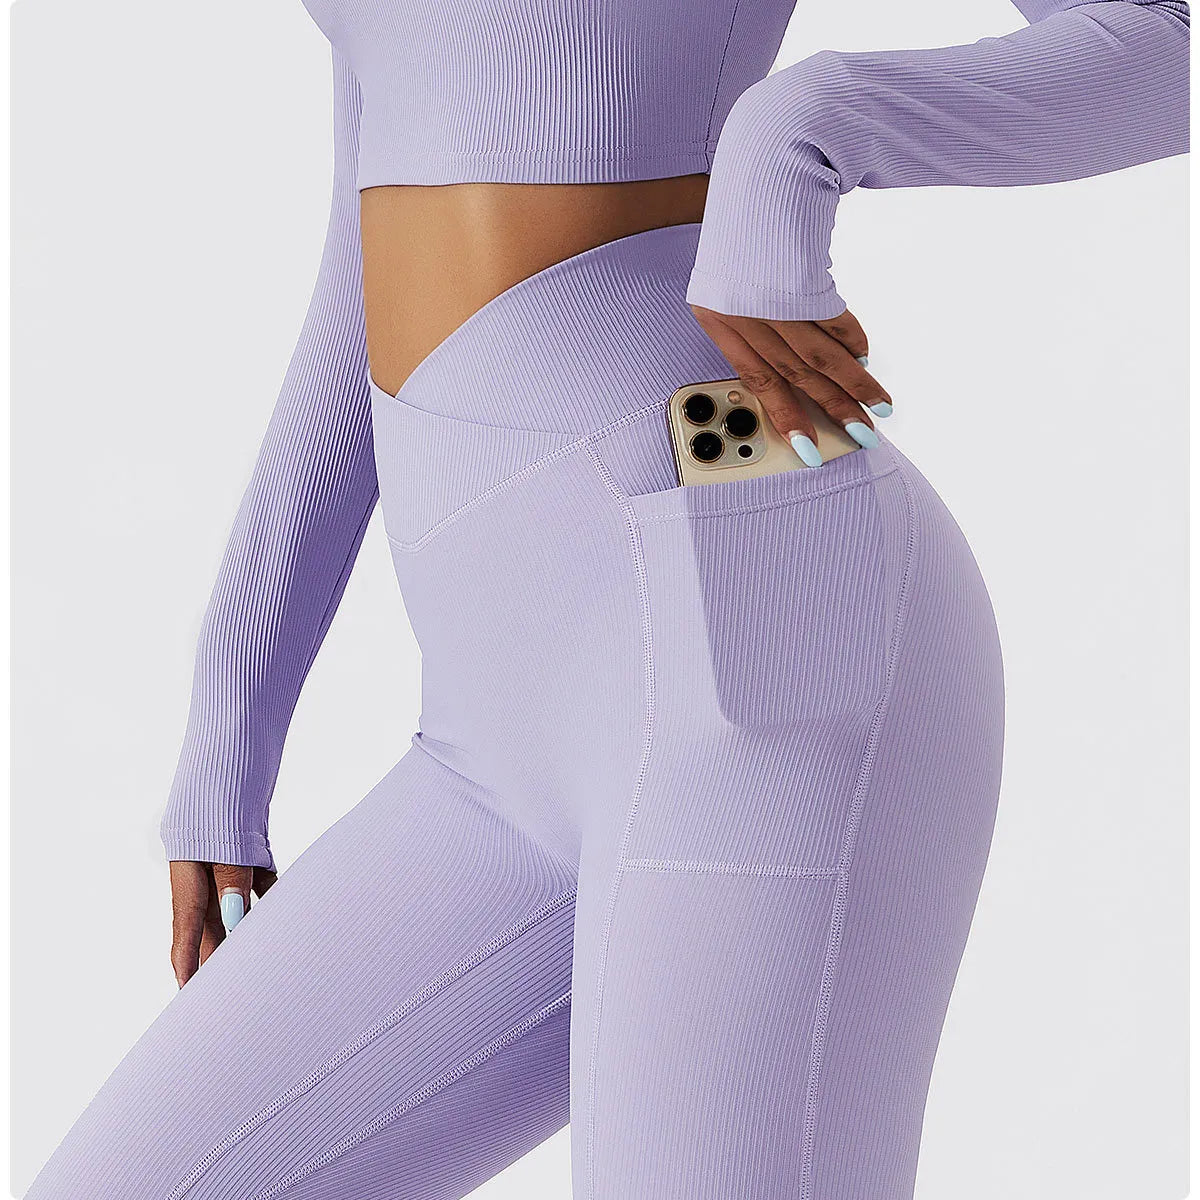 light purple leggings - SUPER soft, lightweight and - Depop